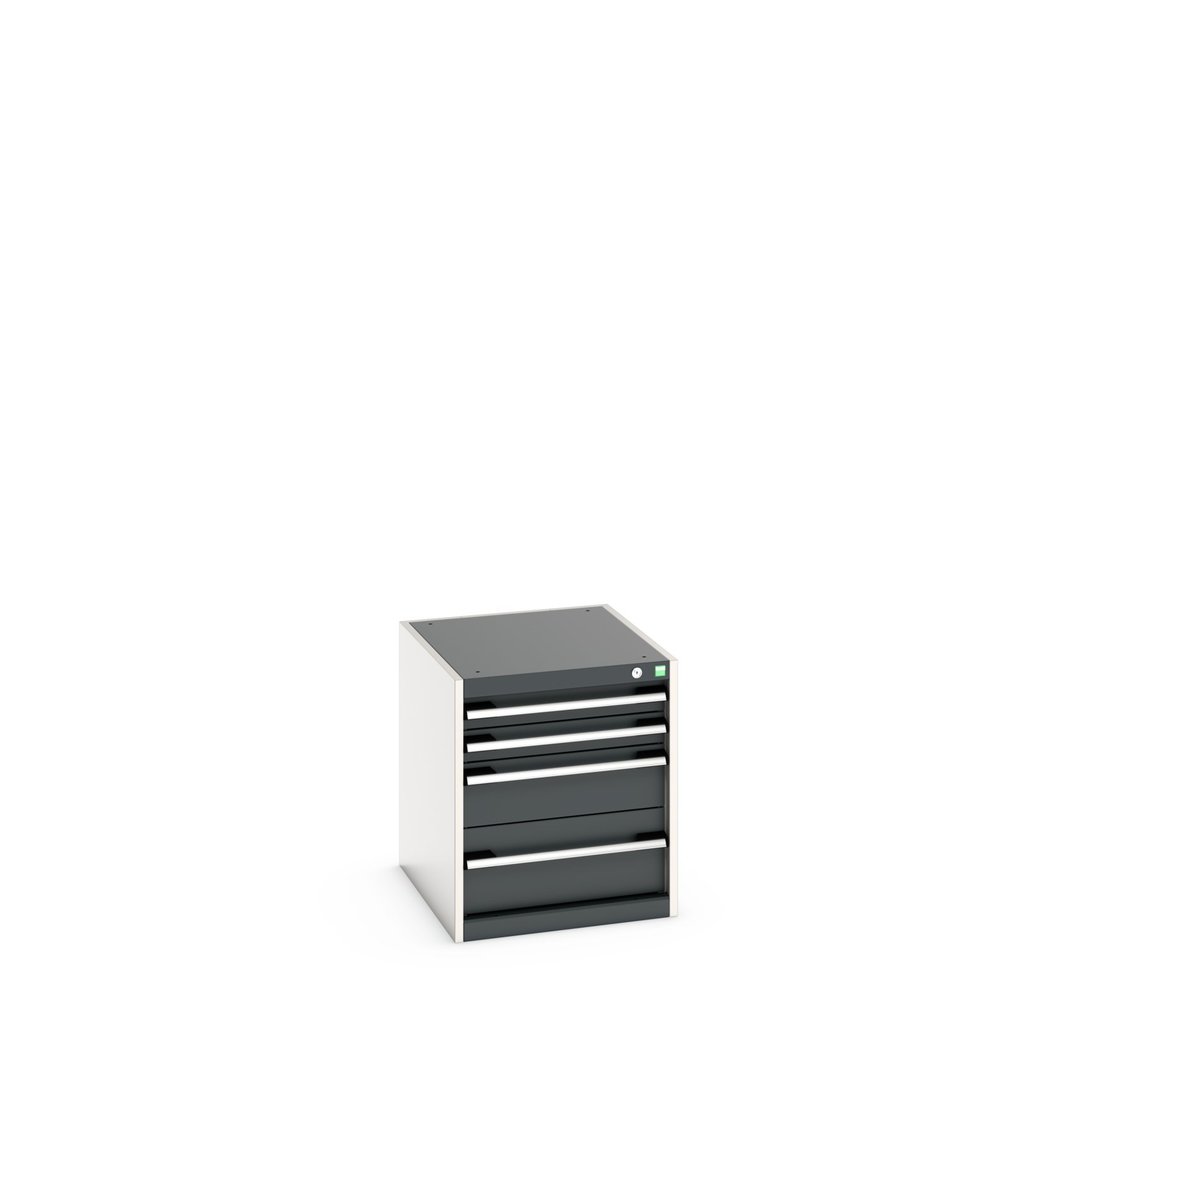 40018017. - cubio drawer cabinet